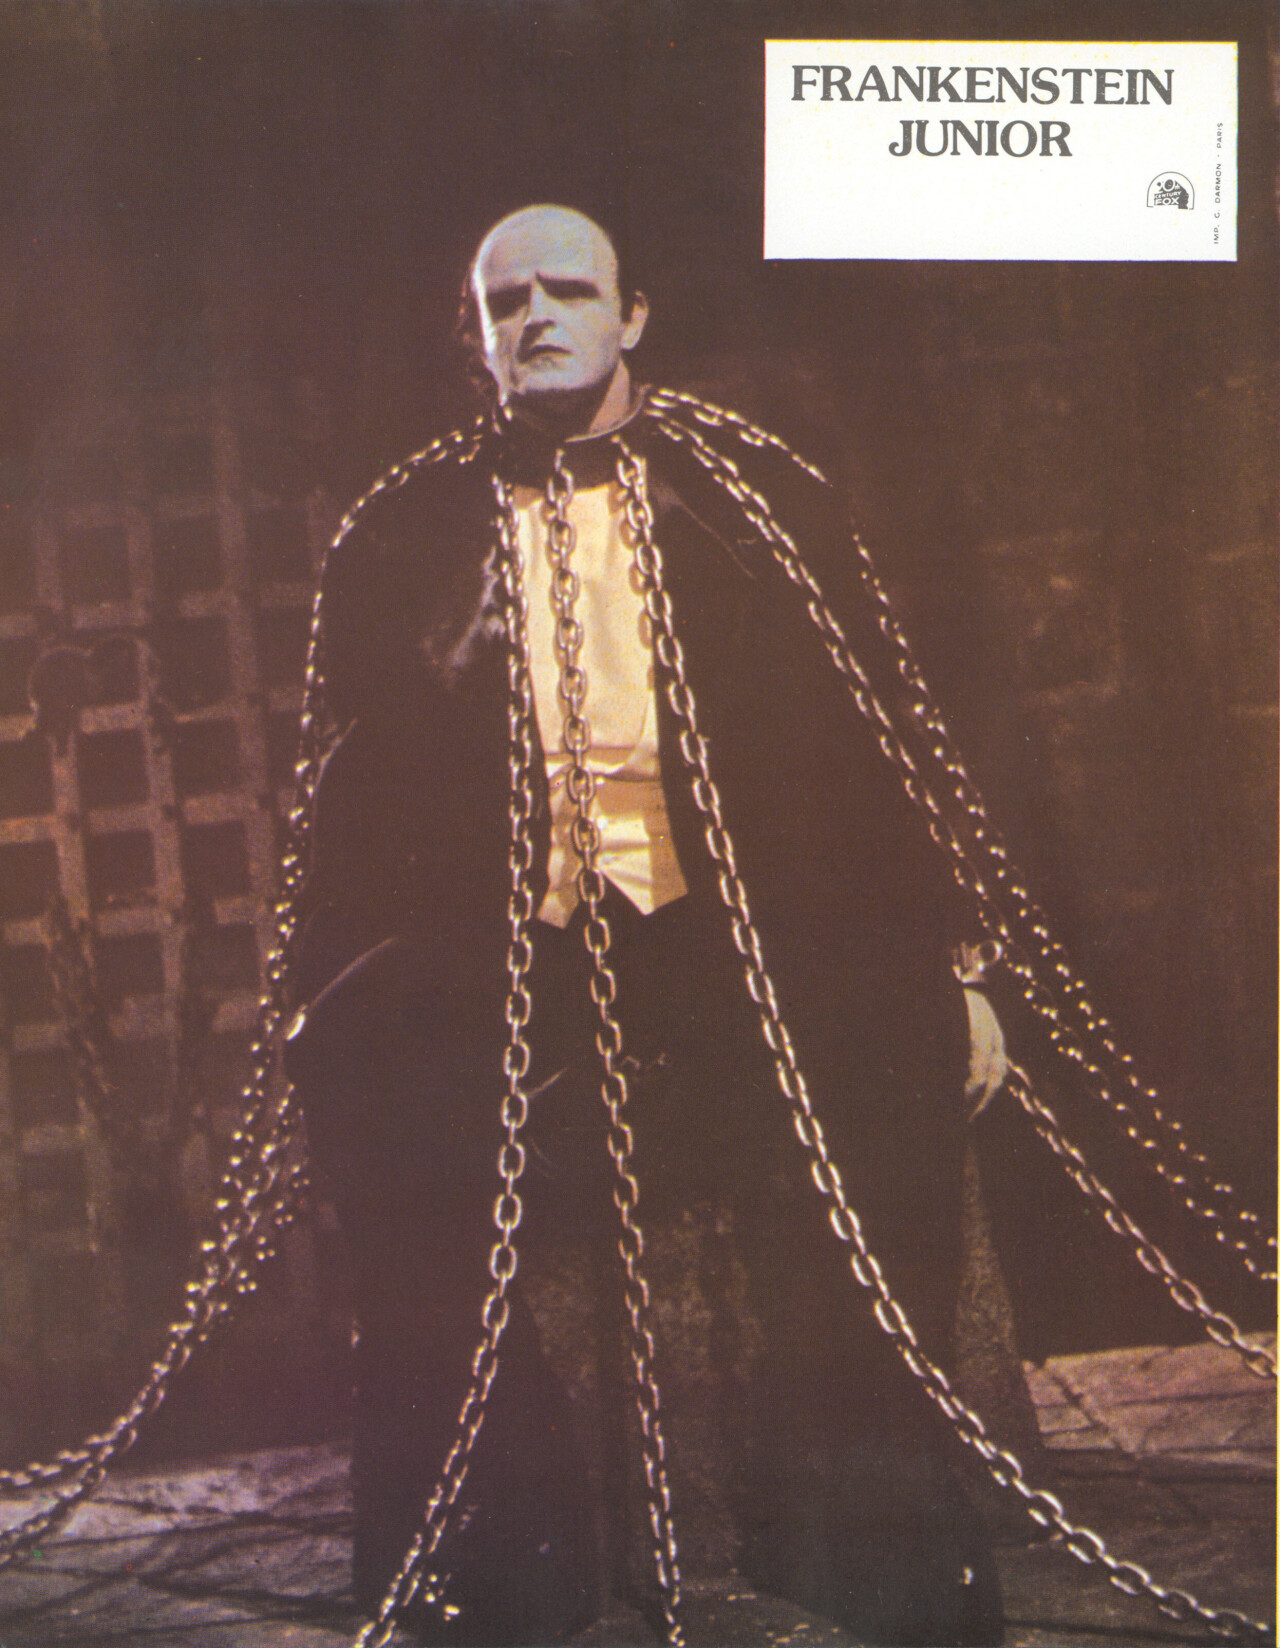 Молодой Франкенштейн (Young Frankenstein, 1974), режиссёр Мэл Брукс, французский постер к фильму (ужасы, 1974 год)_15